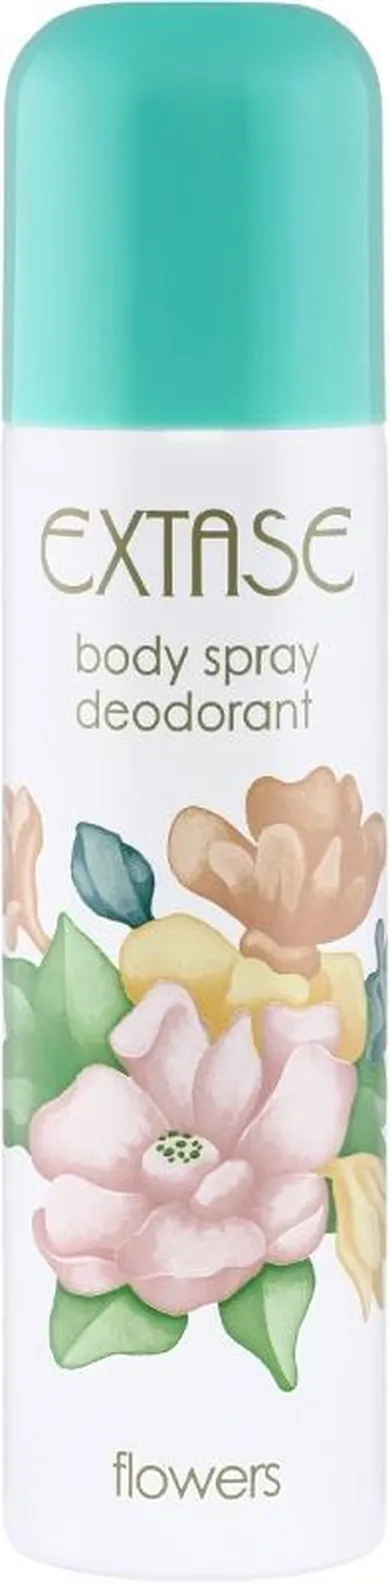 Extase, dezodorant, body spray, flowers, 150 ml